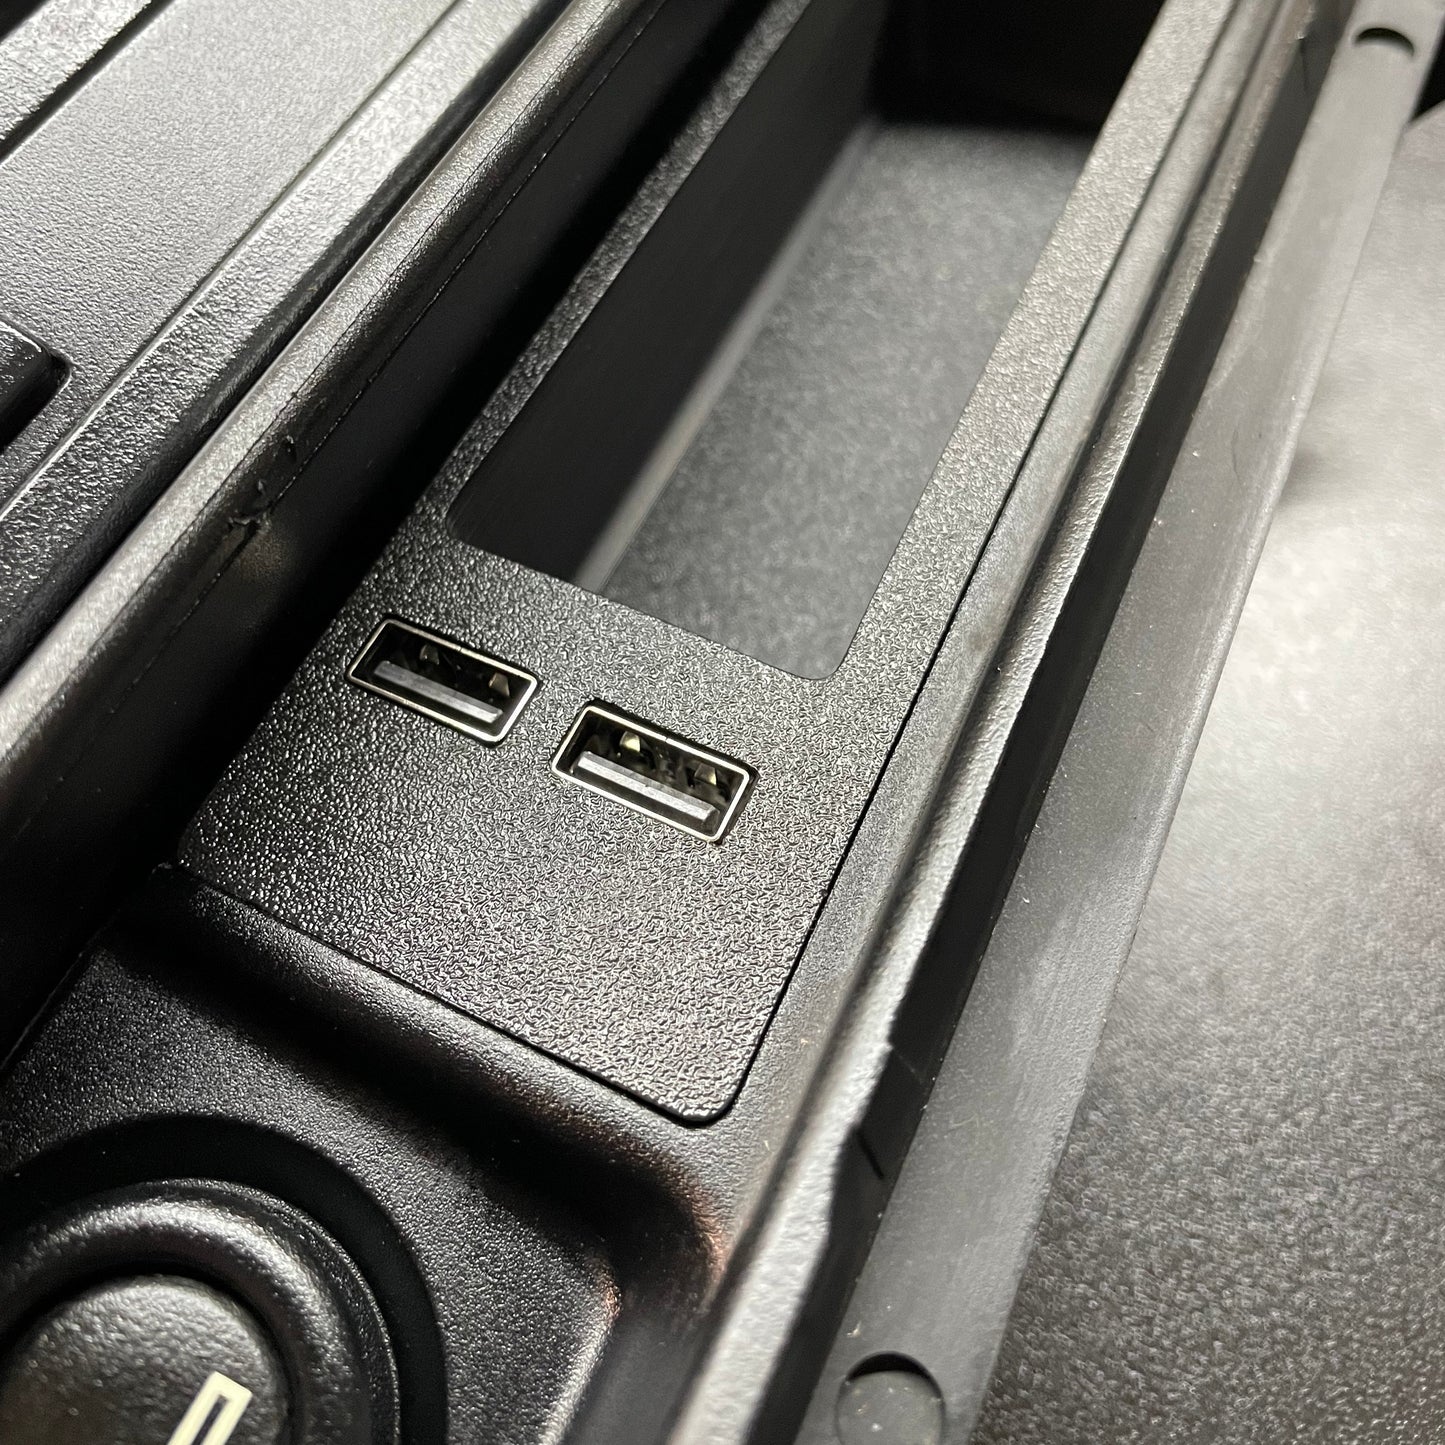 OEM E46 BMW 3 series interior upgrade fast charge USB port